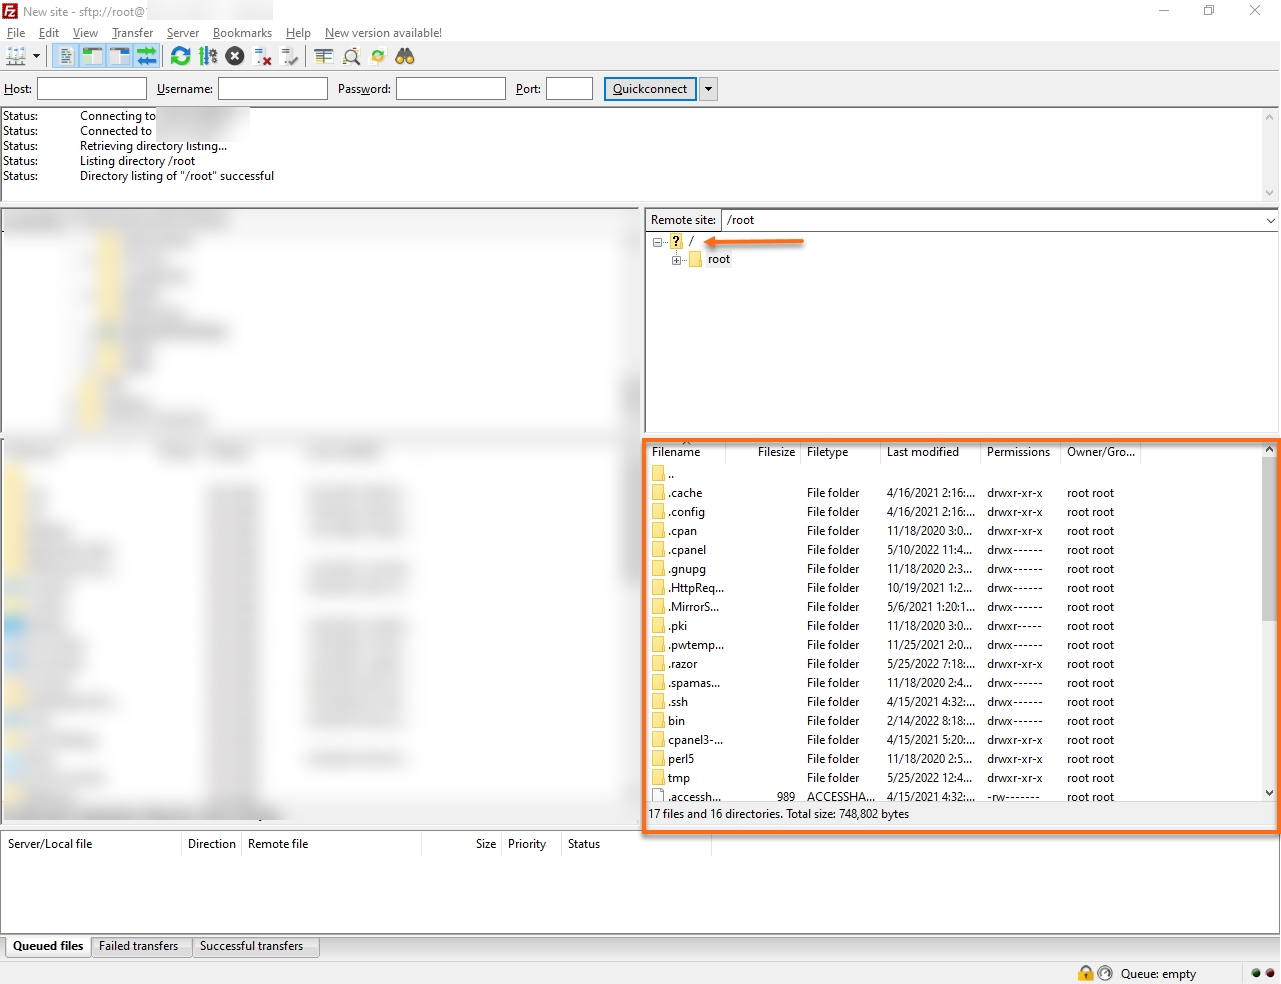 HostGator - FileZilla Files Directory